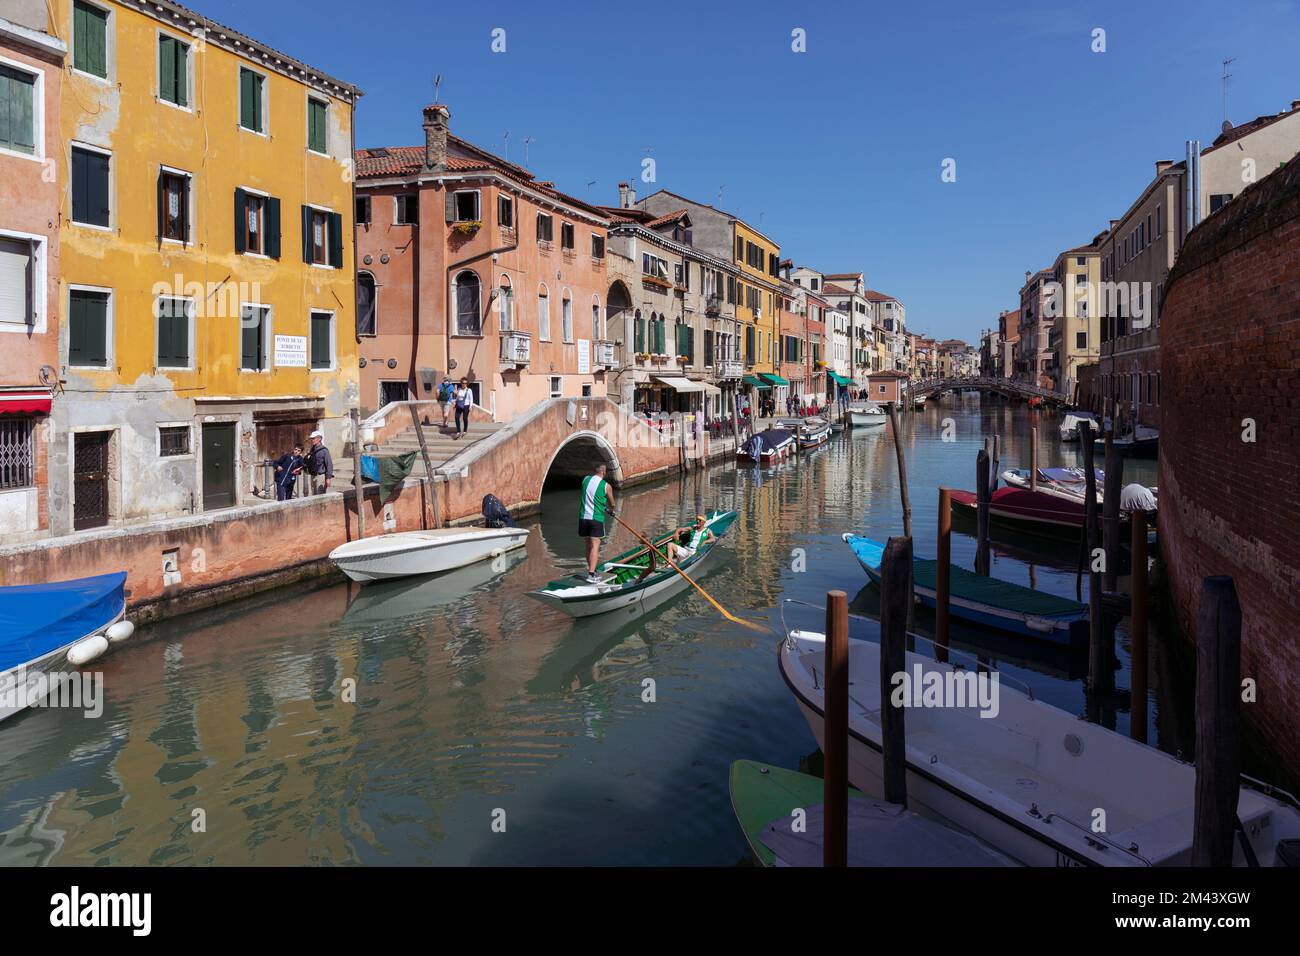 Venice, Venice Province, Veneto Region, Italy.  Boats on the Fondamenta de le Capuzine.  The man is rowing a boat known as a sandolo. Stock Photo